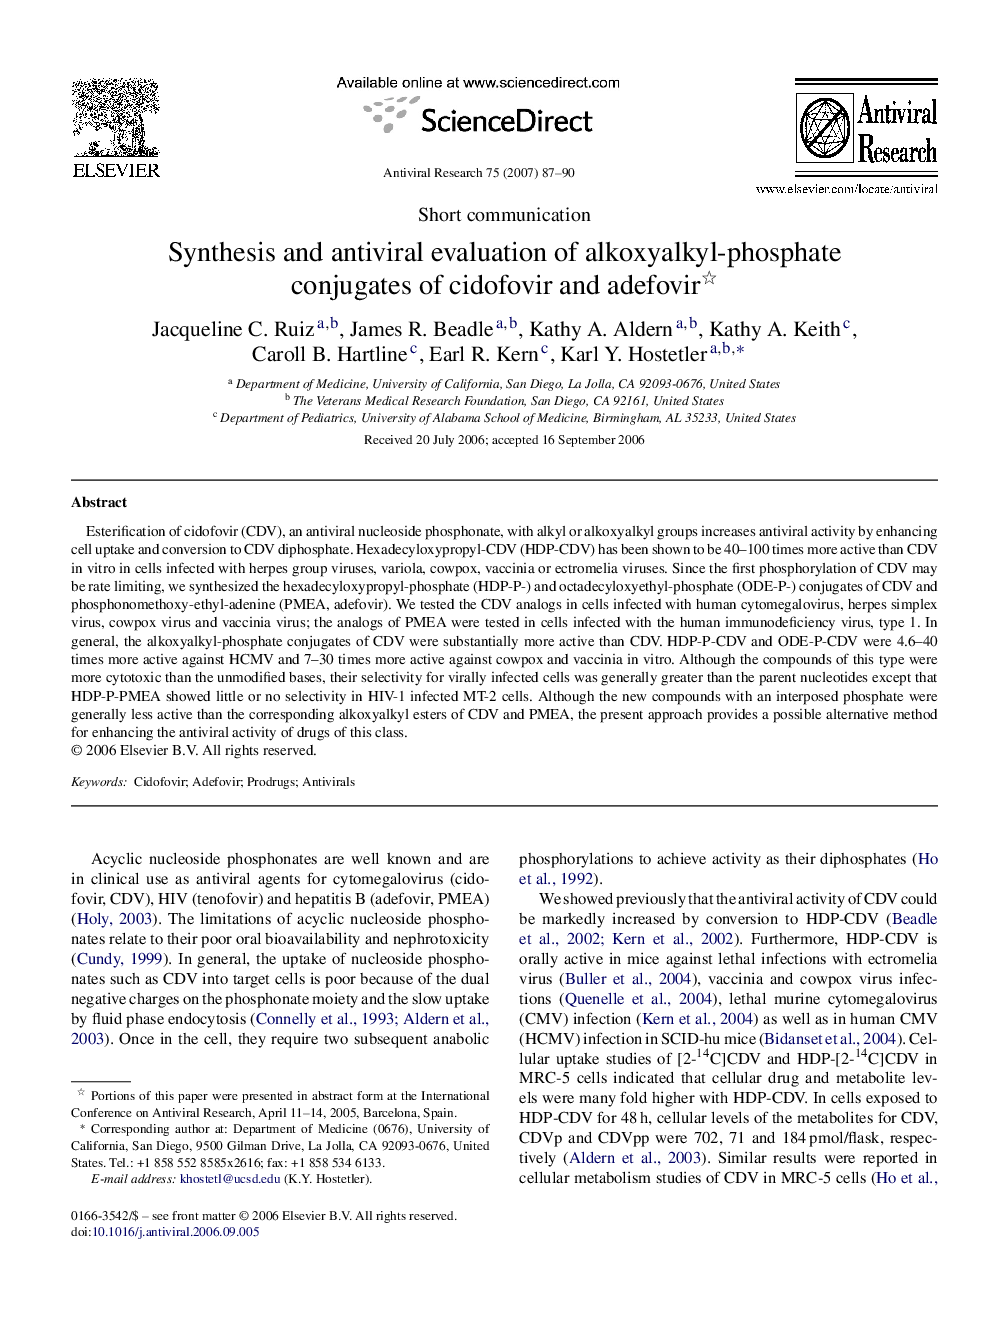 Synthesis and antiviral evaluation of alkoxyalkyl-phosphate conjugates of cidofovir and adefovir 